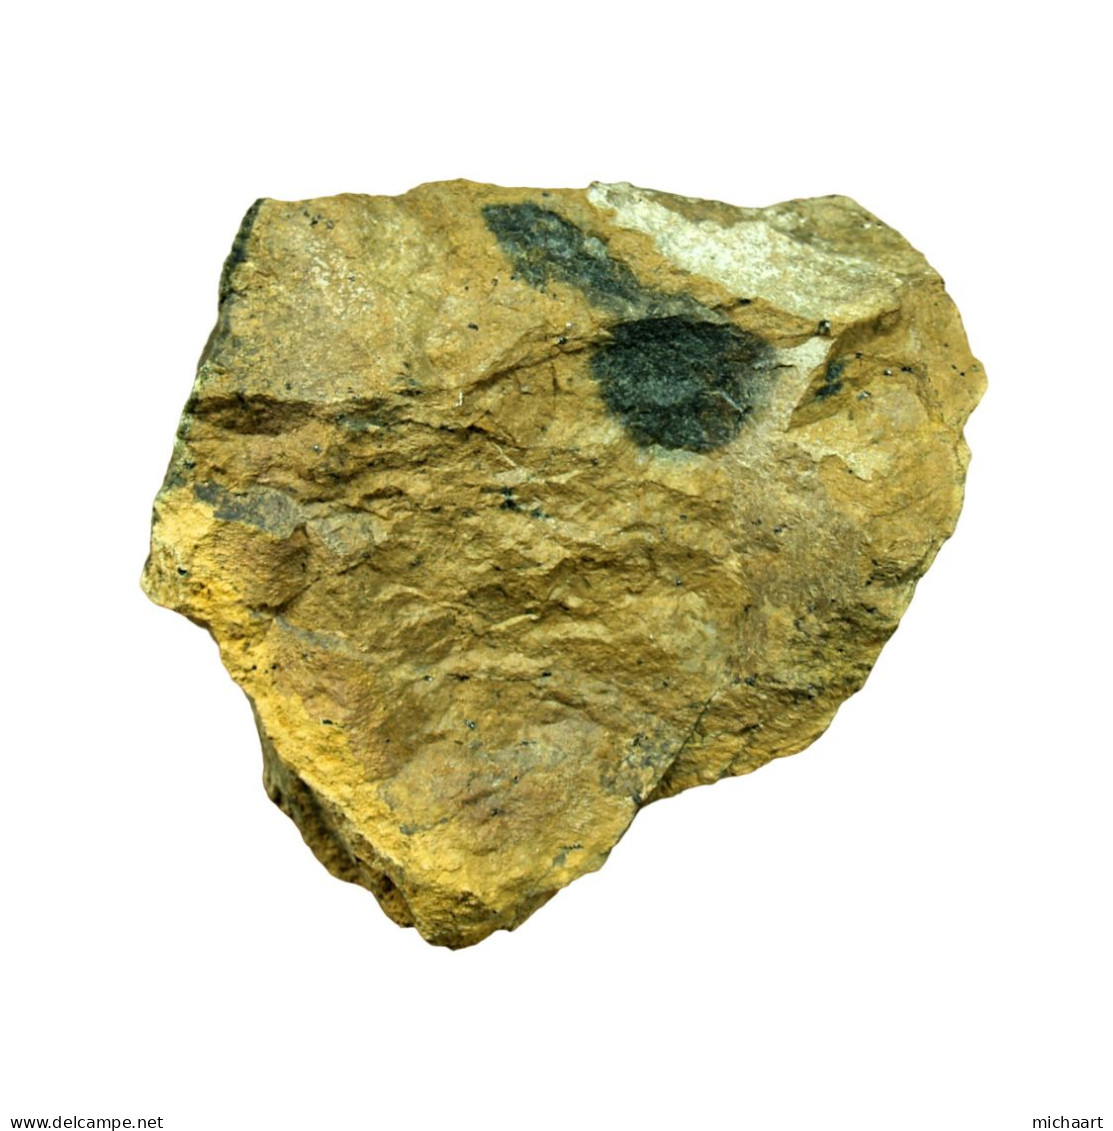 Dunite Mineral Rock Specimen 891g - 32oz Cyprus Troodos Ophiolite Geology 04404 - Minerales